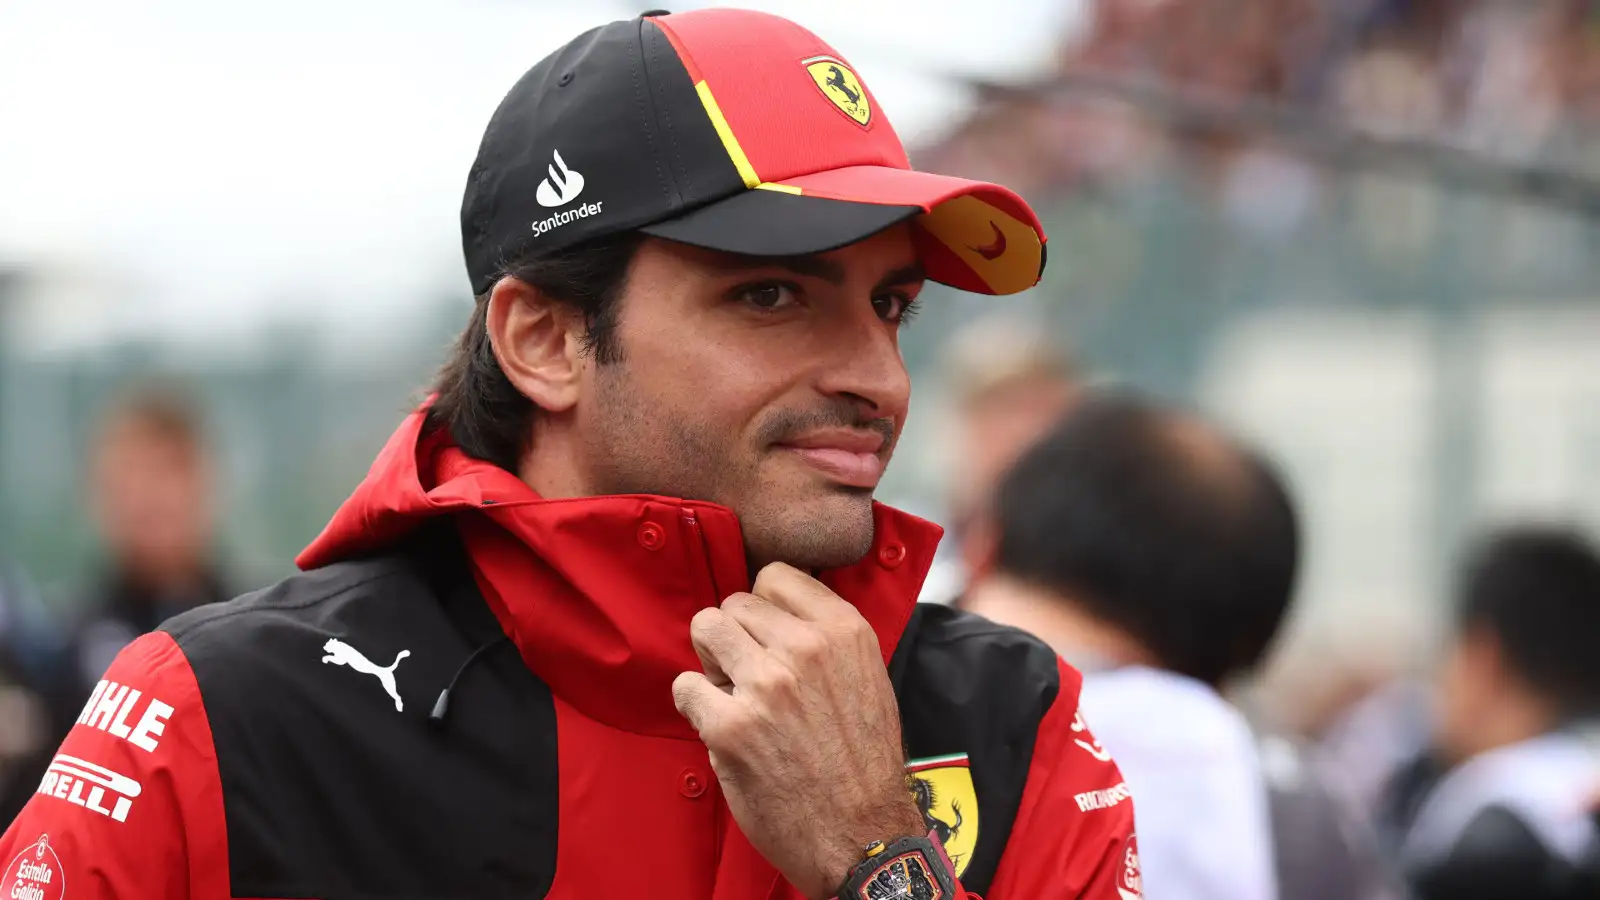 2023 Belgian Grand Prix: Ferrari's Carlos Sainz adjusts his jacket against the windy conditions at Spa-Francorchamps.